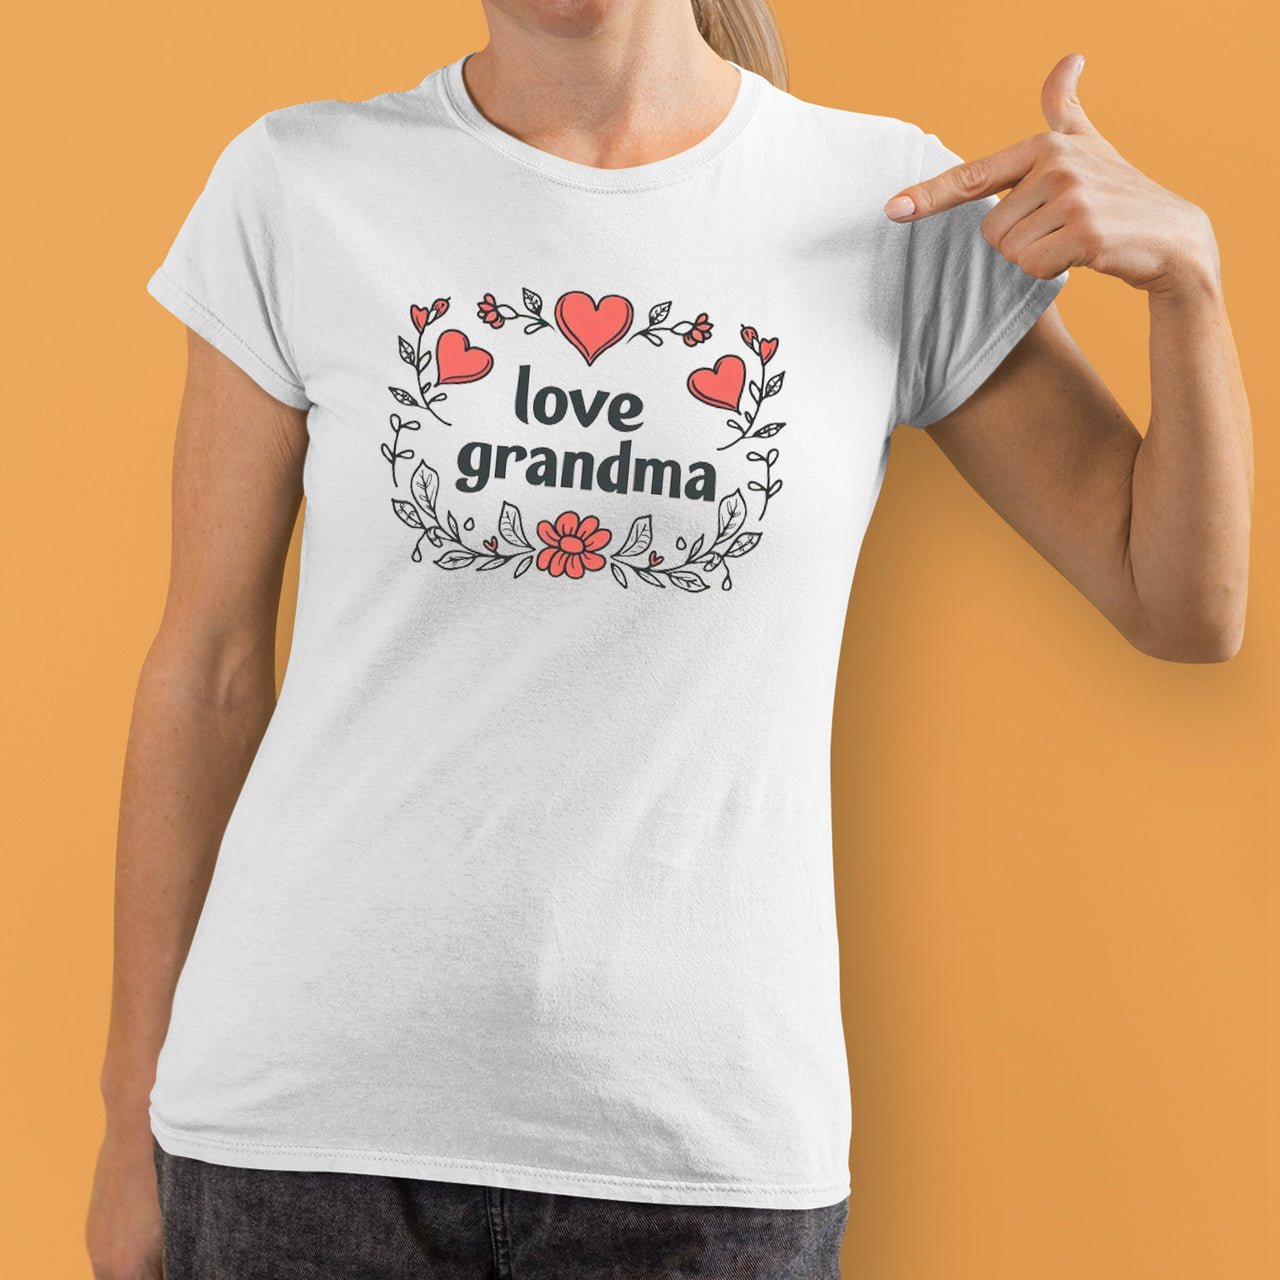 Love Grandma T-Shirt, Flowers Grandma Shirt, Celebrate Mom, Nana Shirt, Floral Grandma Hoodie, Grandma Shirt, Mother's Day Gift For Grandma, Happy Mother's Day